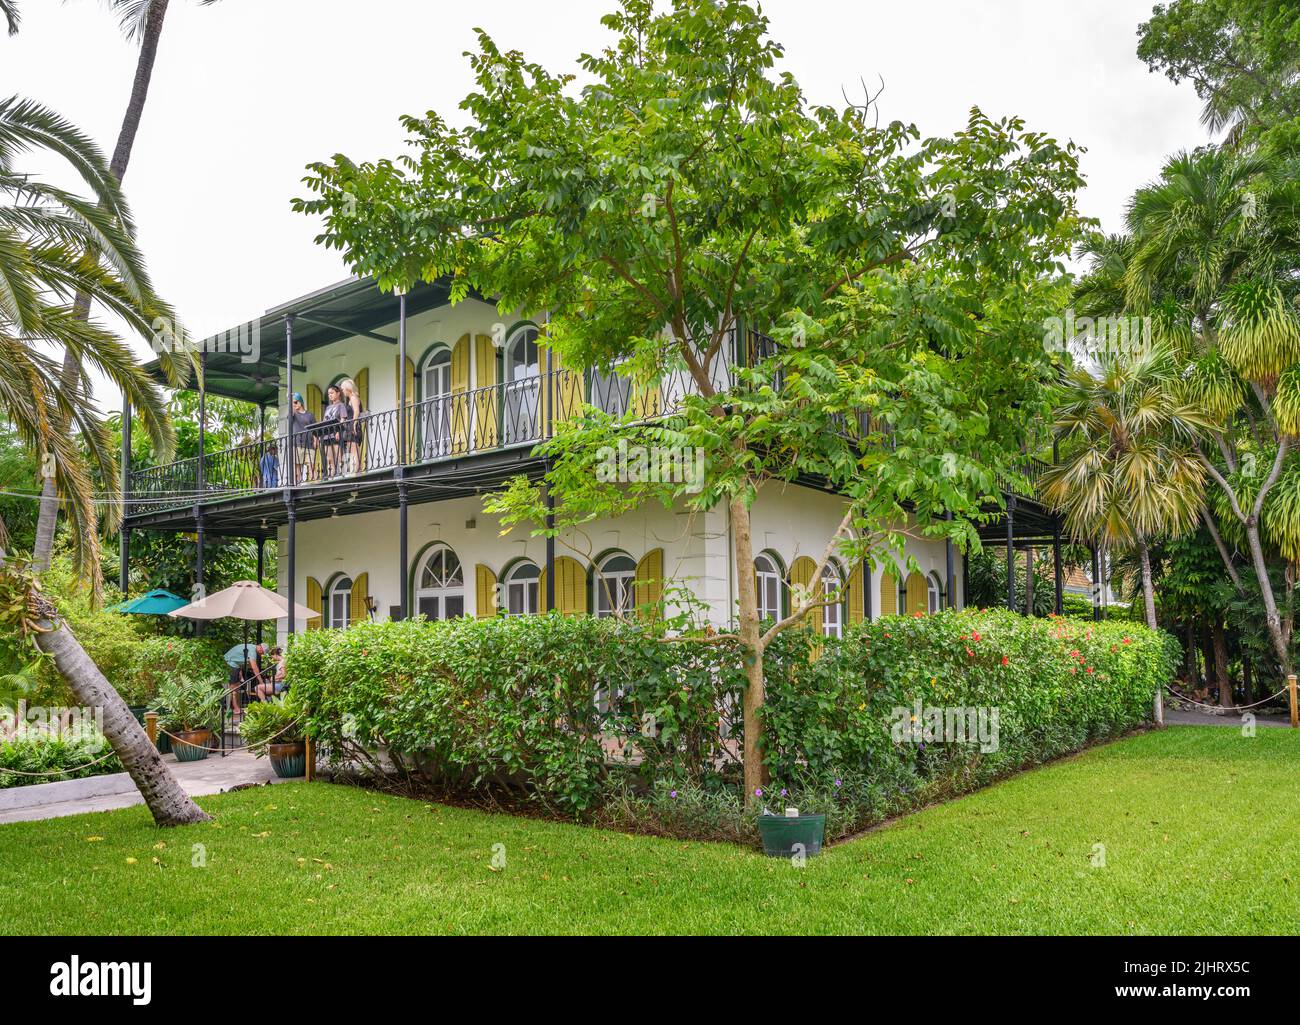 The Hemingway Home and Museum, Whitehead Street, Key West, Florida Keys, Florida, USA Stock Photo